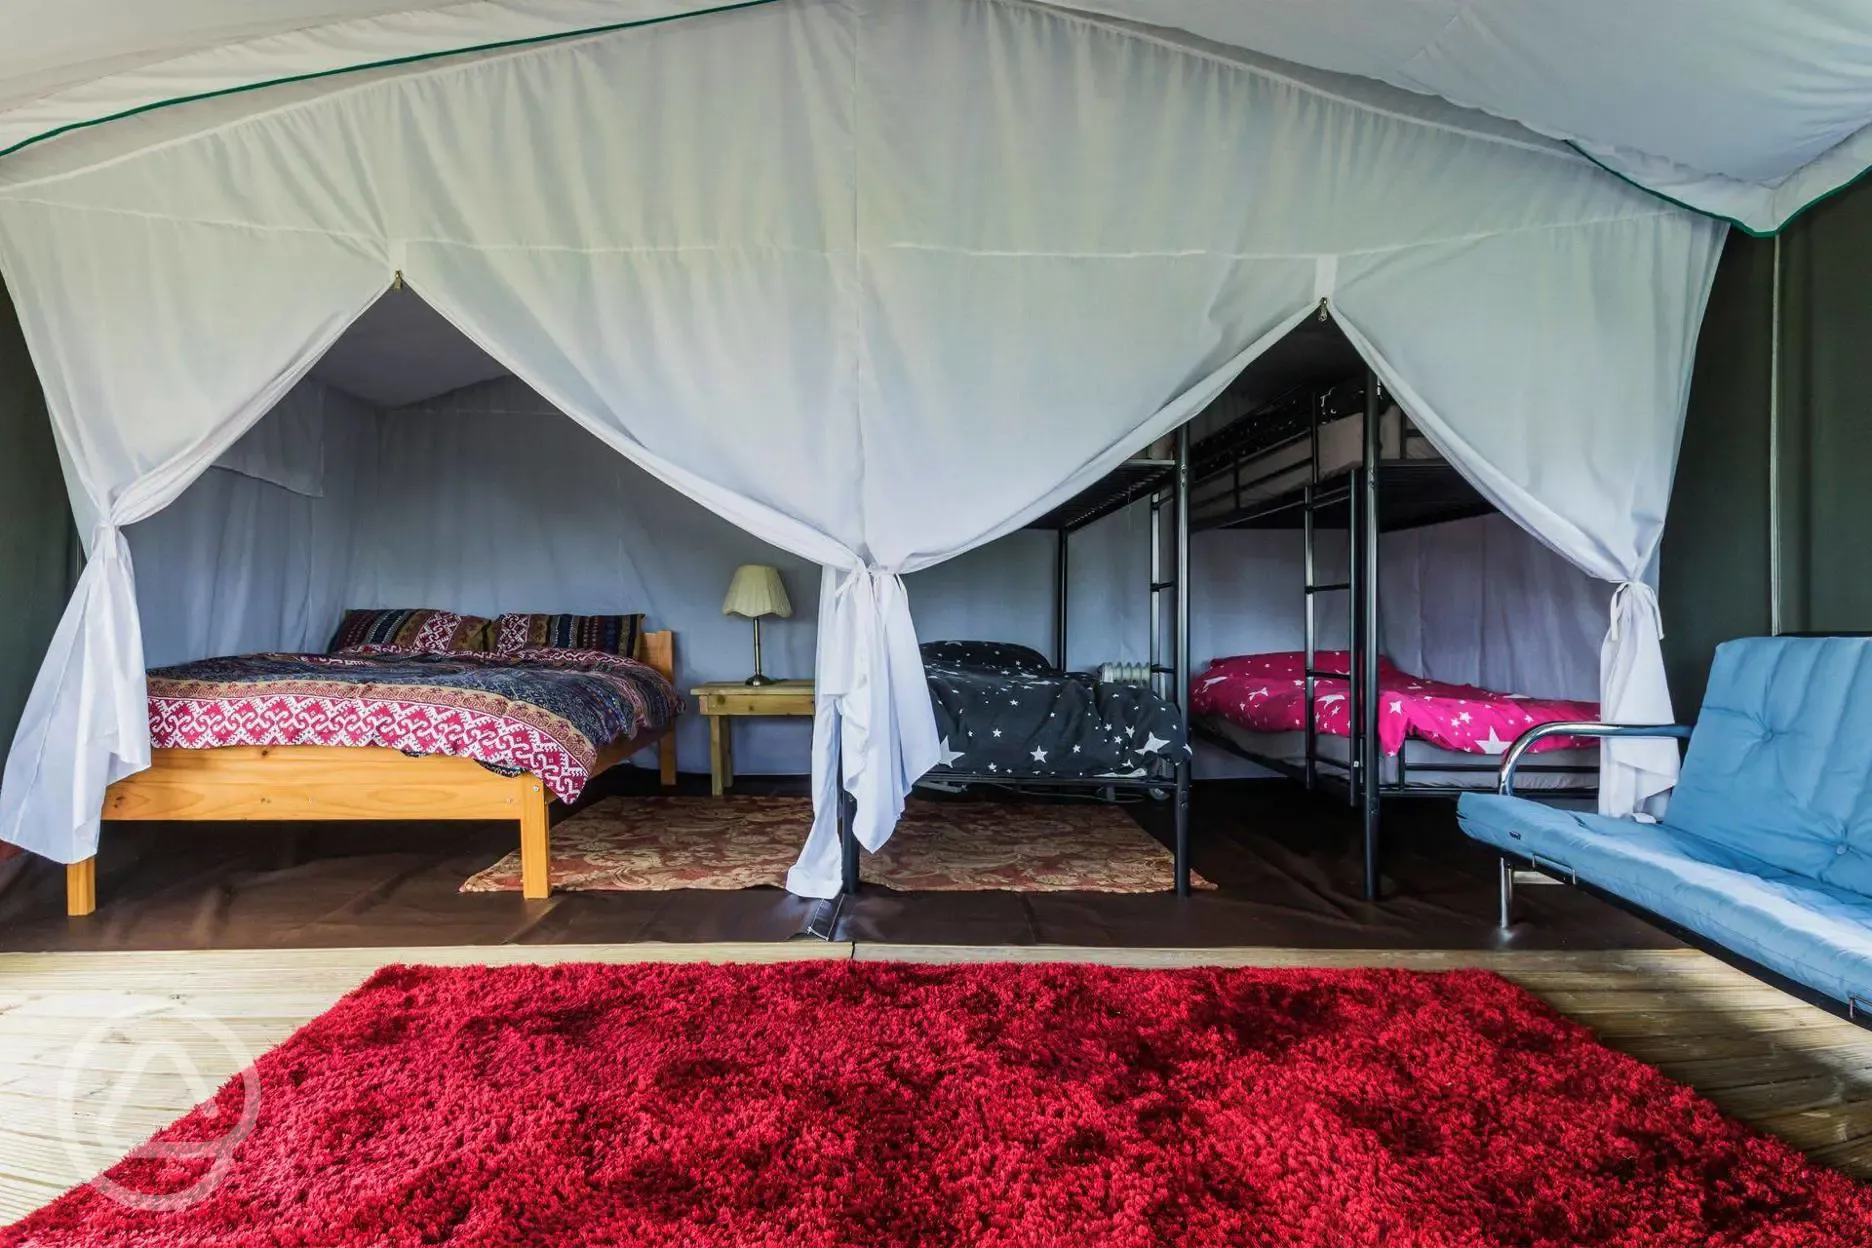 Tent bedding interior